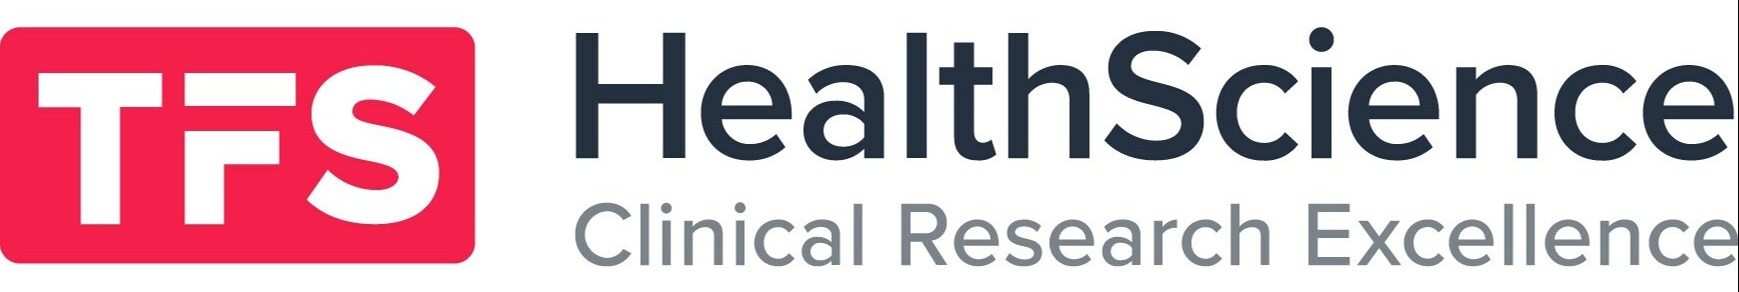 TFS HealthScience background